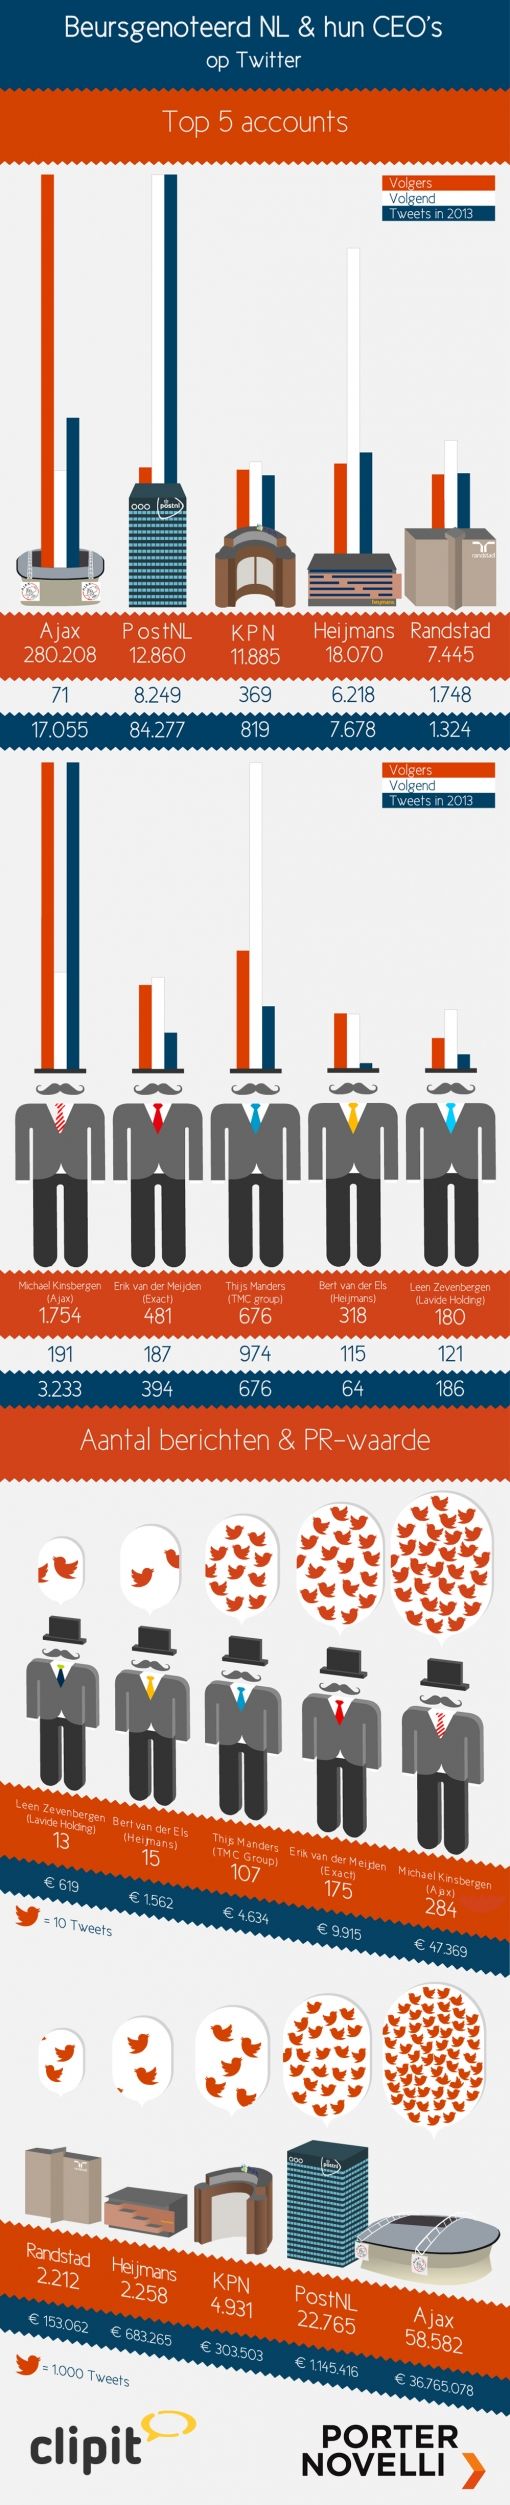 infographic-compleet.jpg